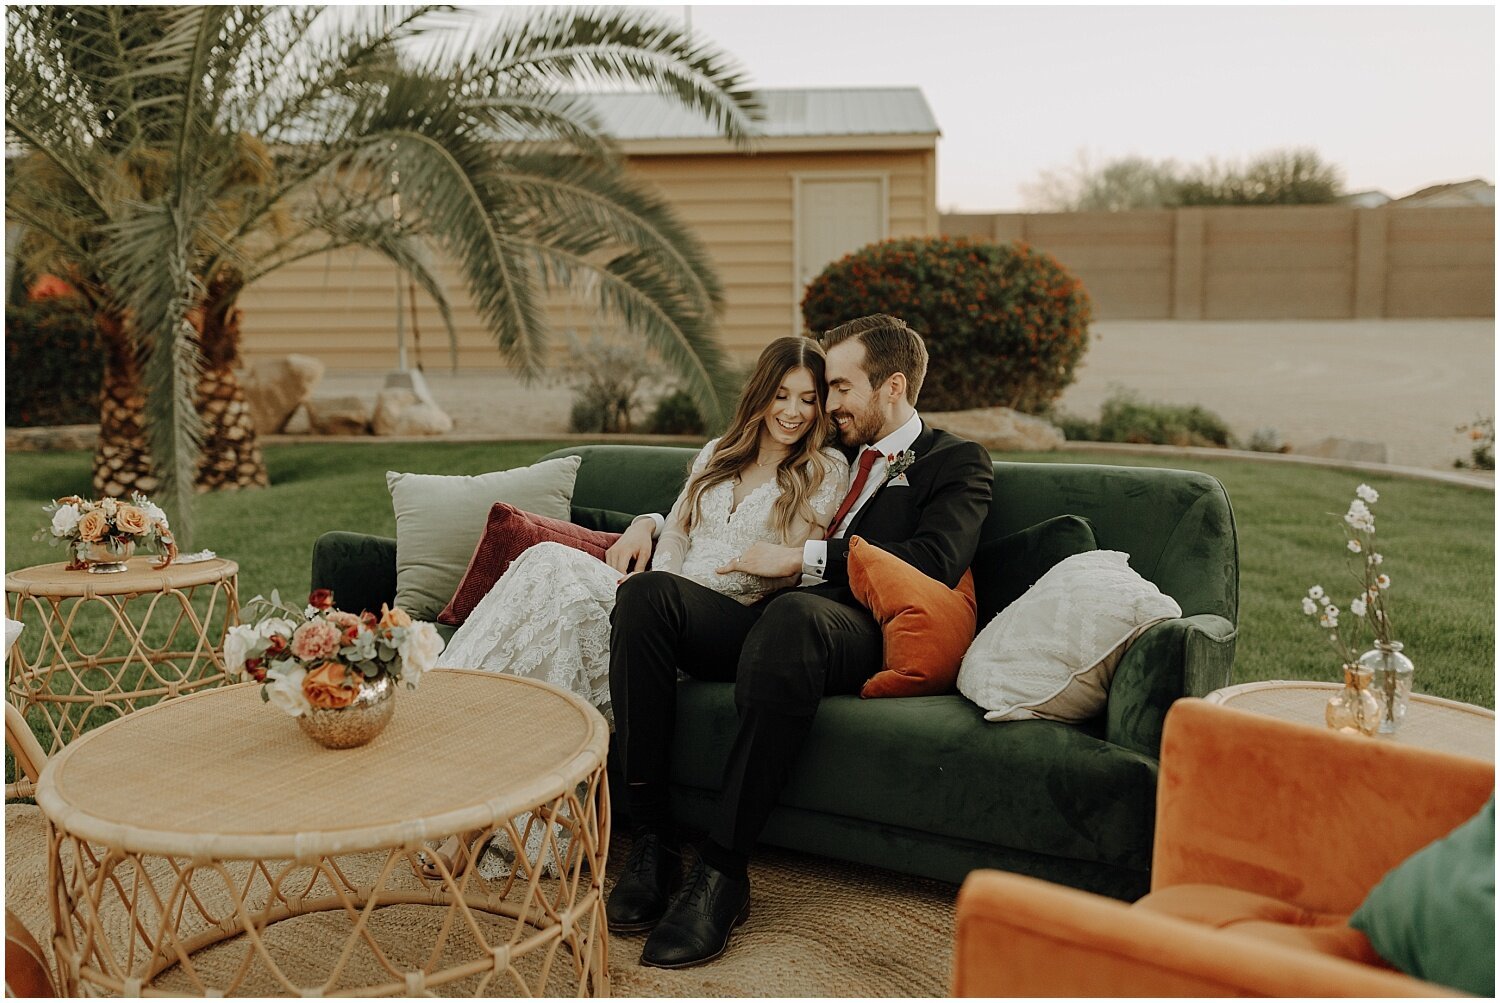 Alexa + Josh | Backyard Boho Wedding